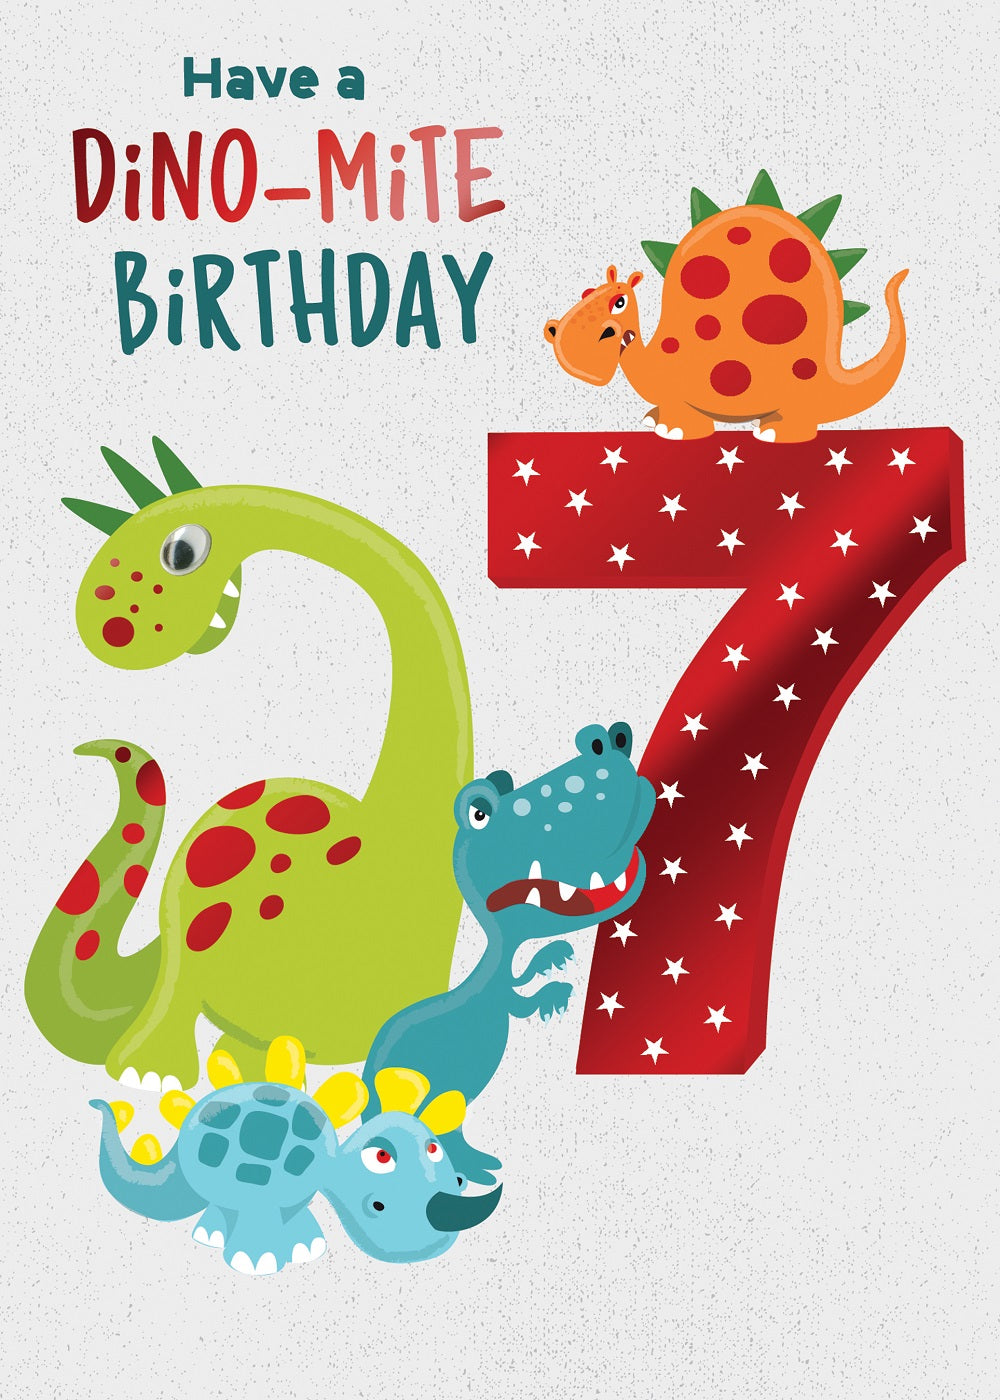 Dino-mite Birthday Boys 7th Birthday Greeting Card